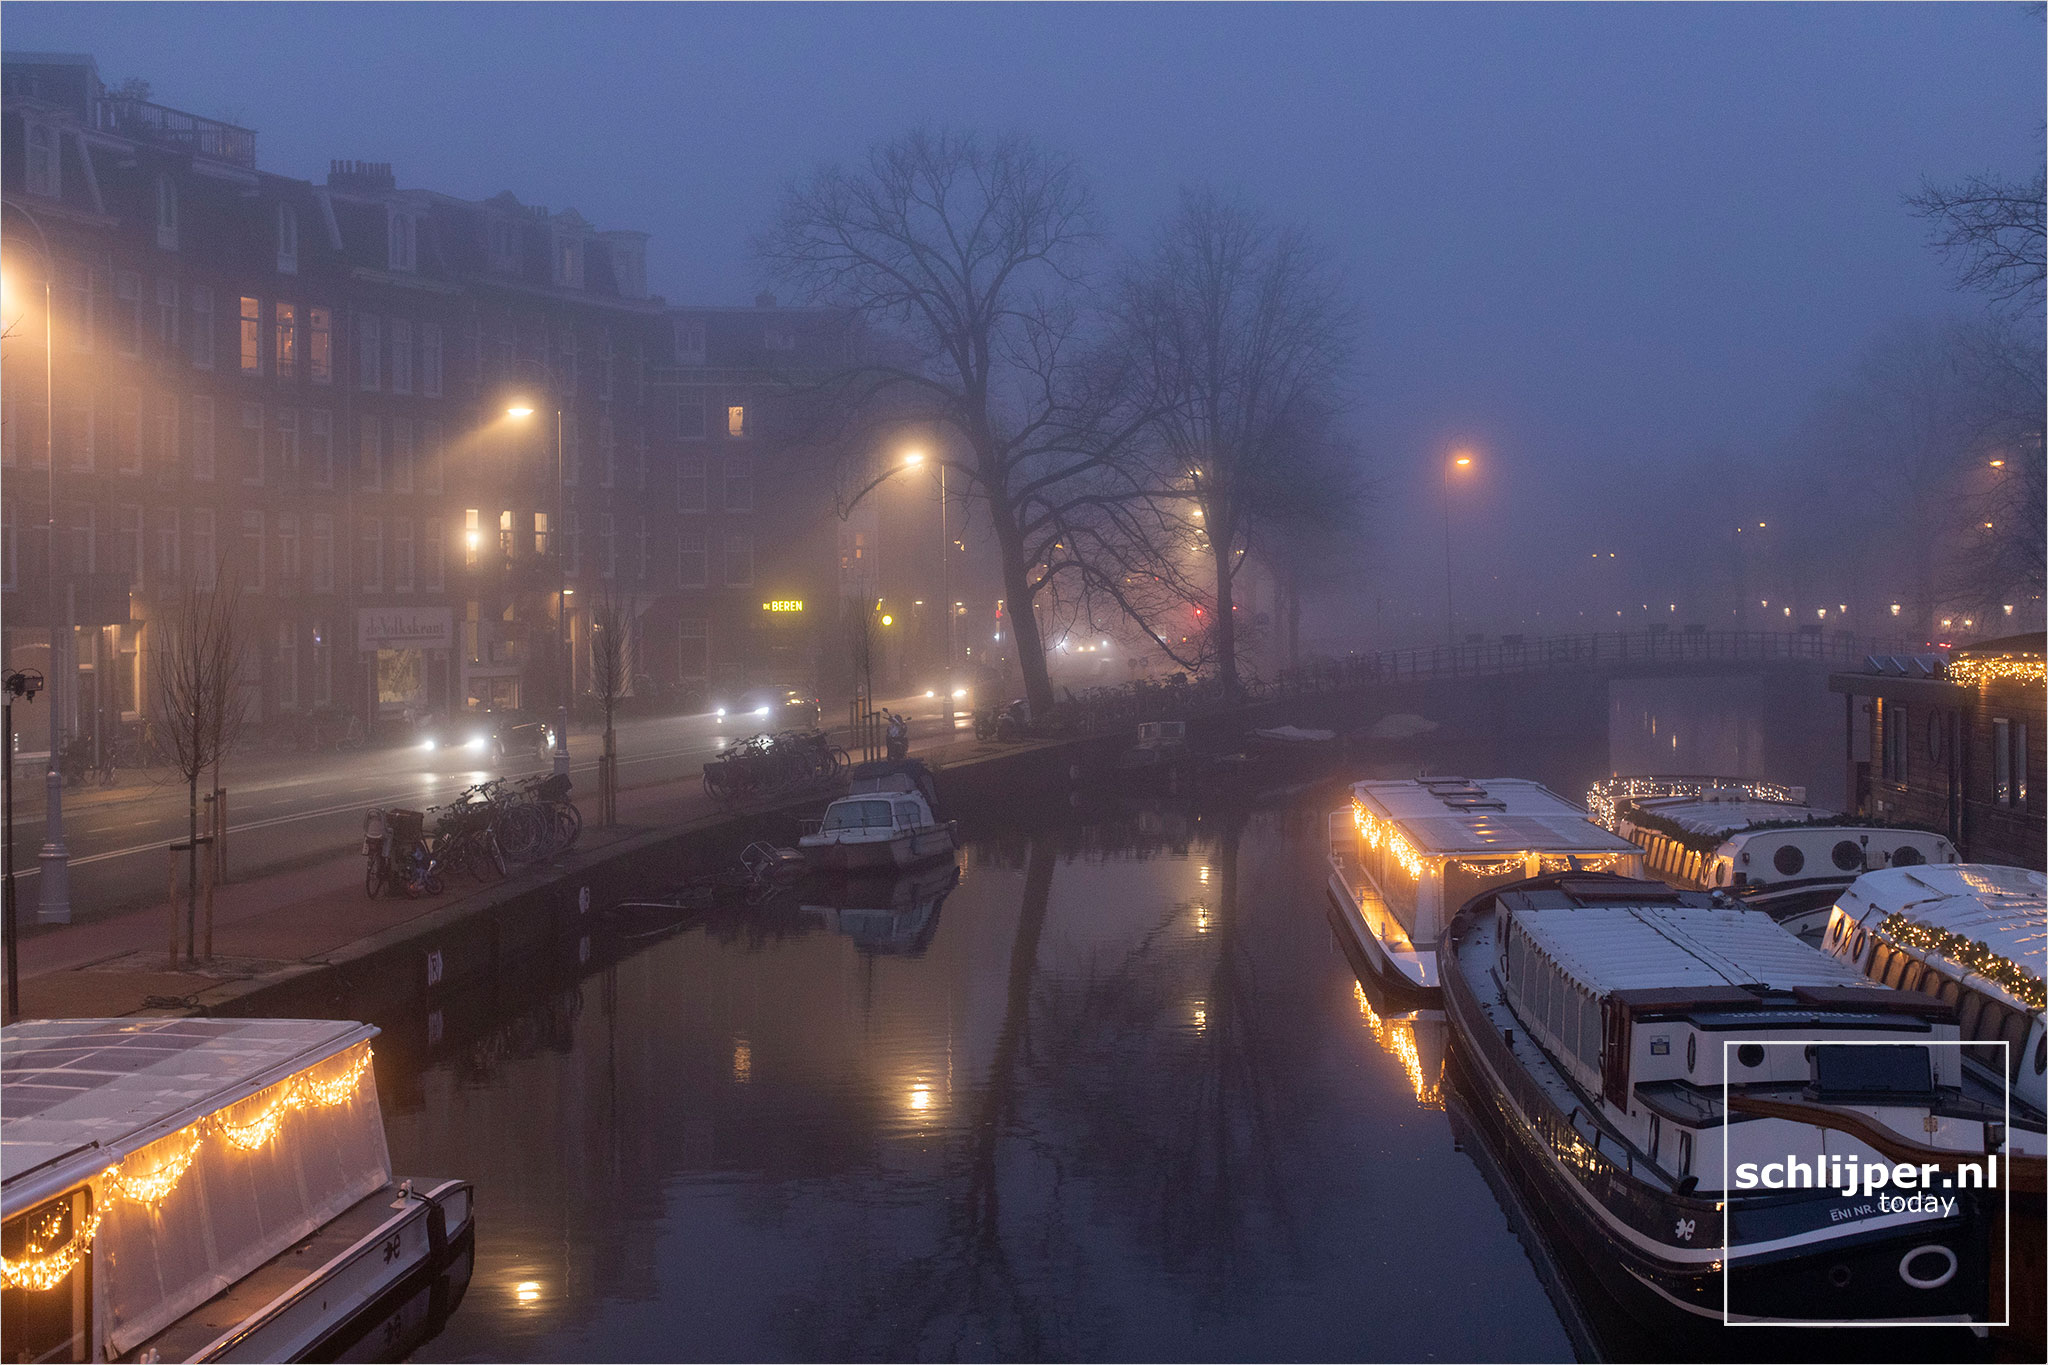 The Netherlands, Amsterdam, 2 januari 2021